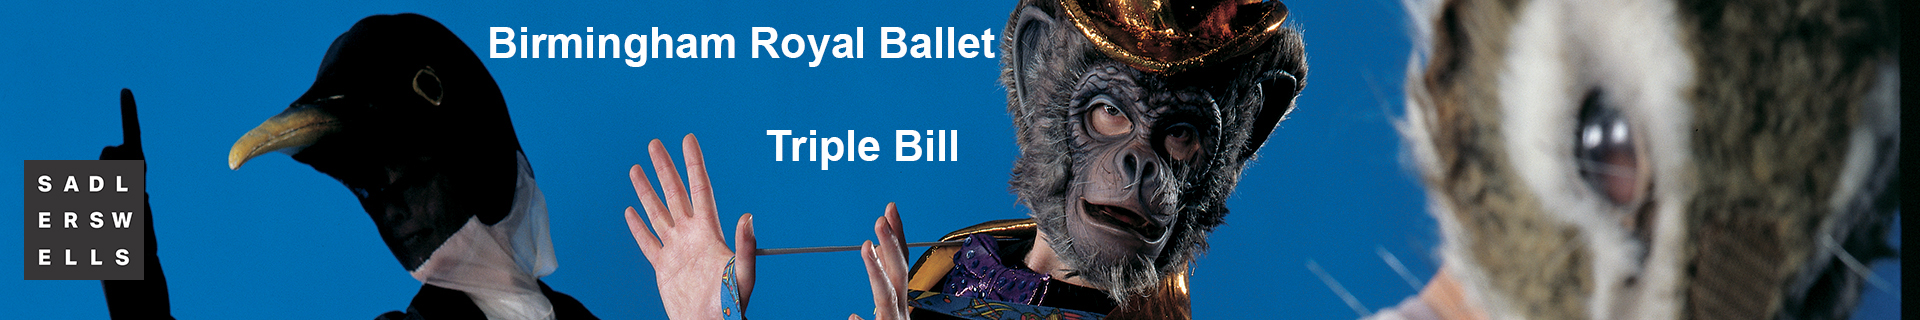 Birmingham Royal Ballet — Mixed Bill Header Images
